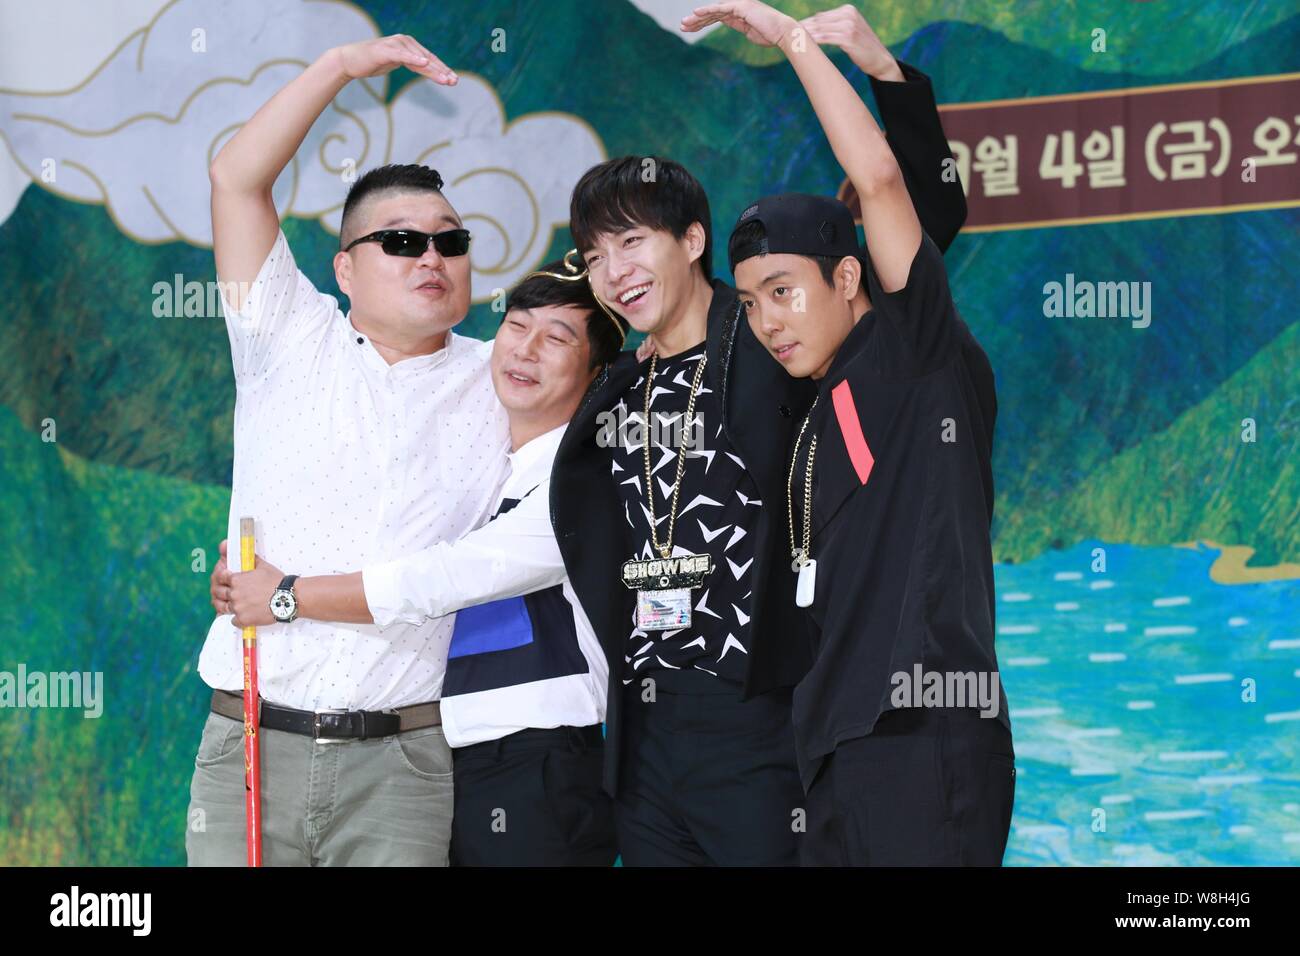 (From left) South Korean MC and comedian Kang Ho-dong, comedian Lee Soo-geun, singer, actor and MC Lee Seung-gi, singer and host Eun Ji-won attend a p Stock Photo